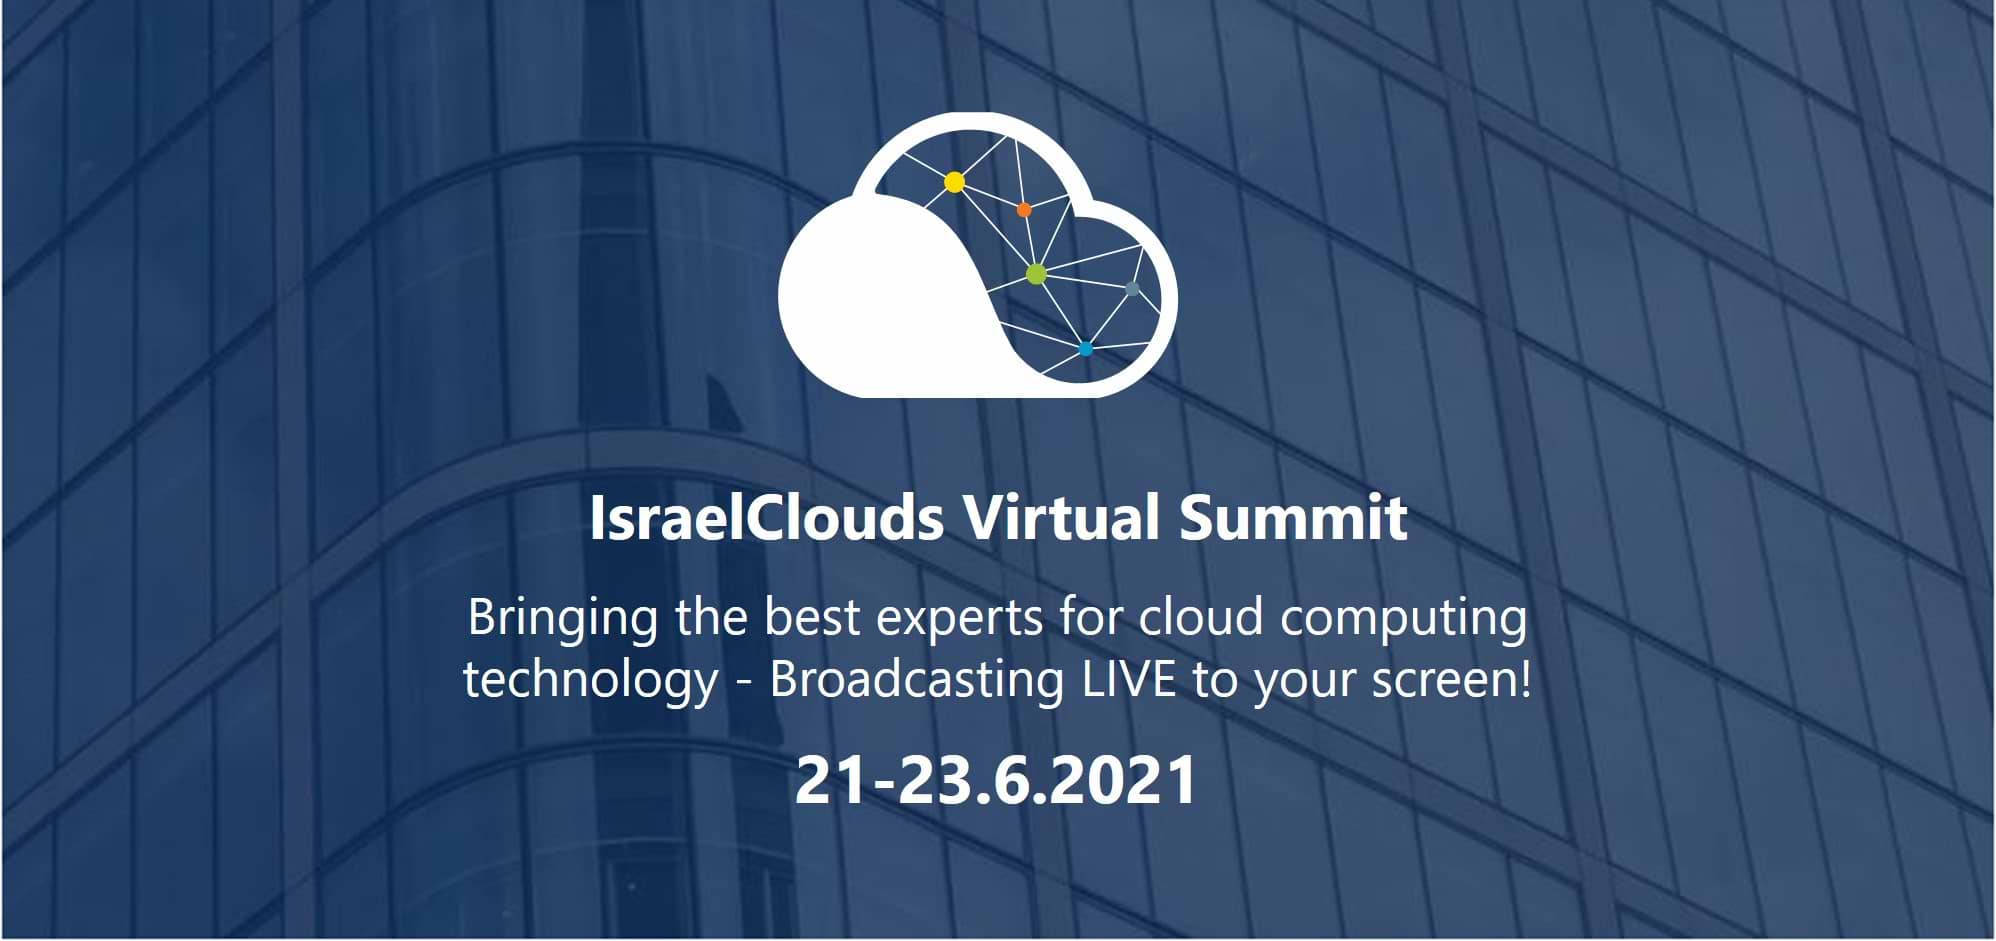 IsraelClouds Virtual Summit